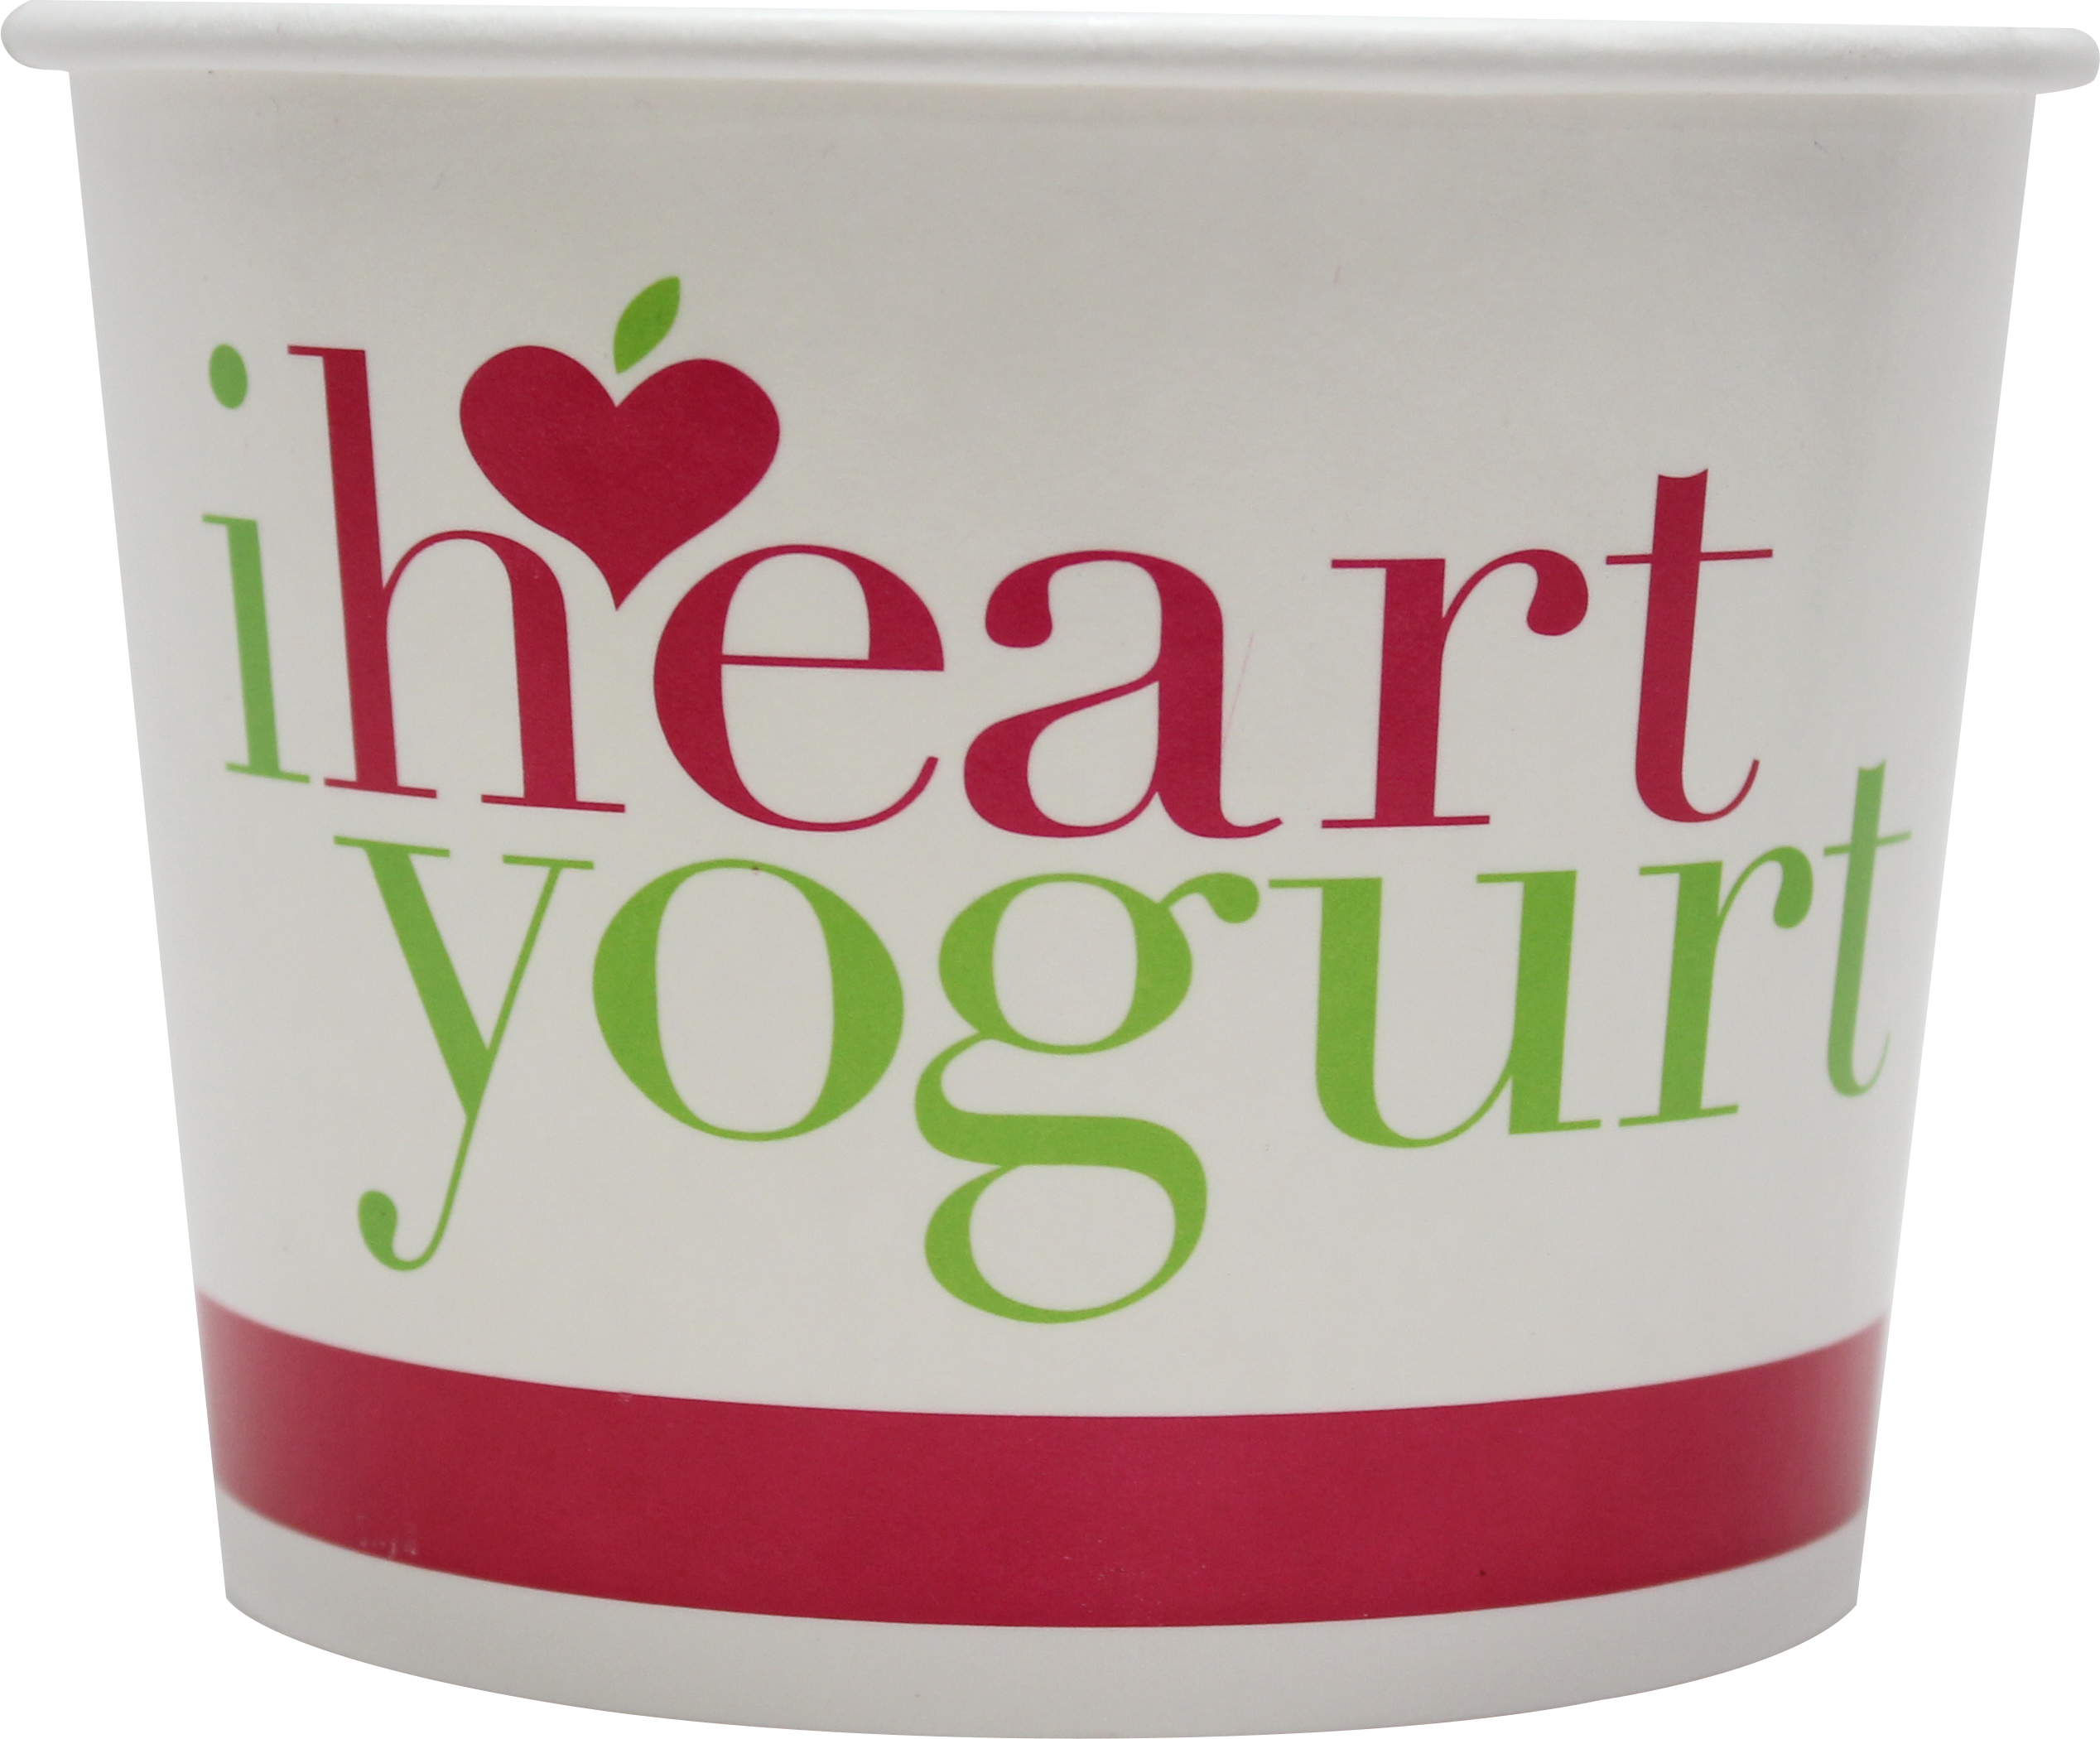 Yogurt PNG images Download